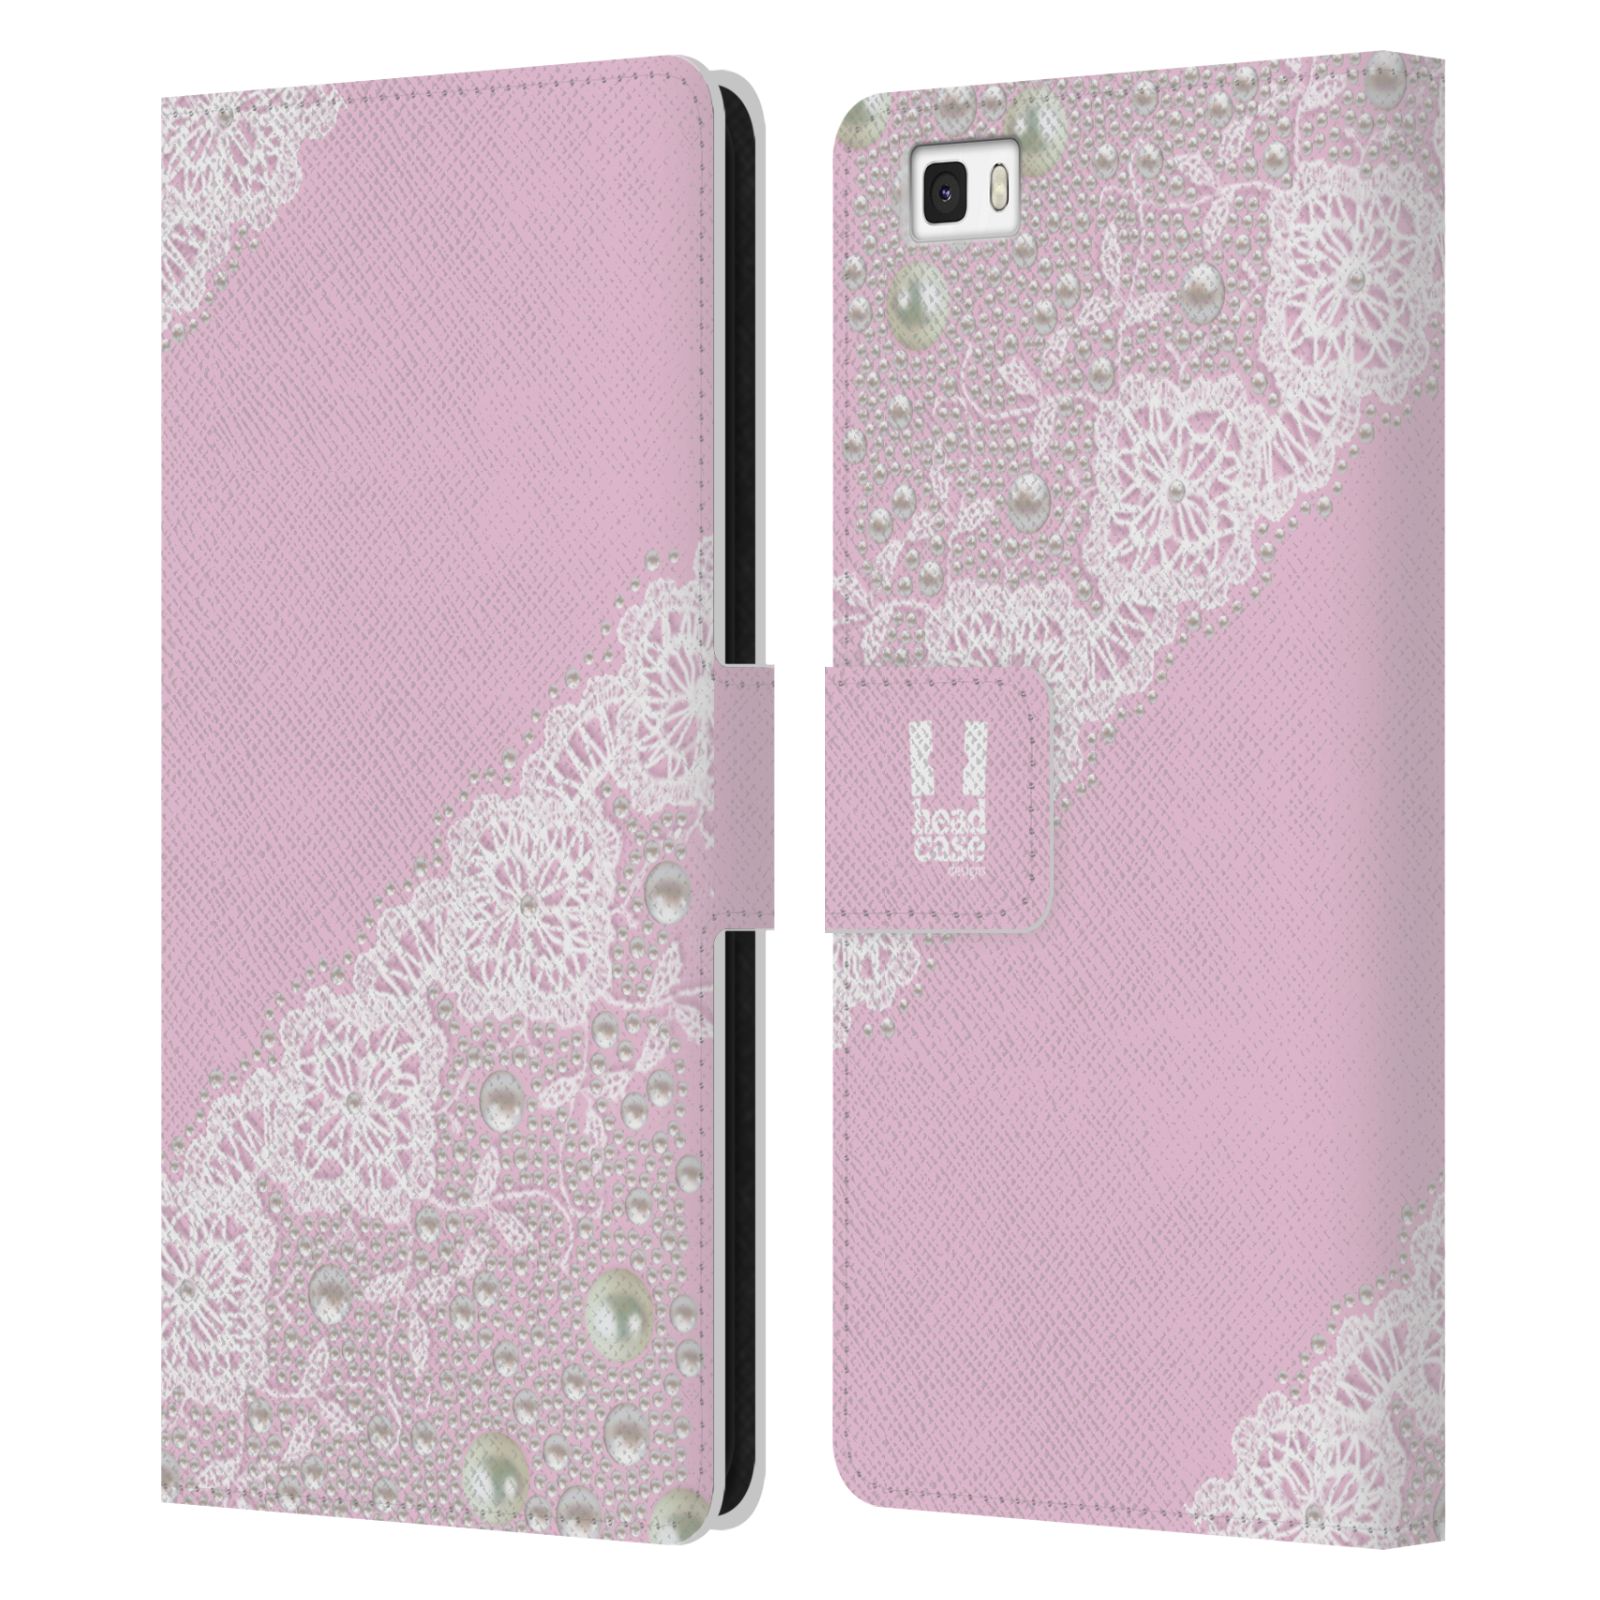 HEAD CASE Flipové pouzdro pro mobil Huawei P8 LITE krajka růžová barva